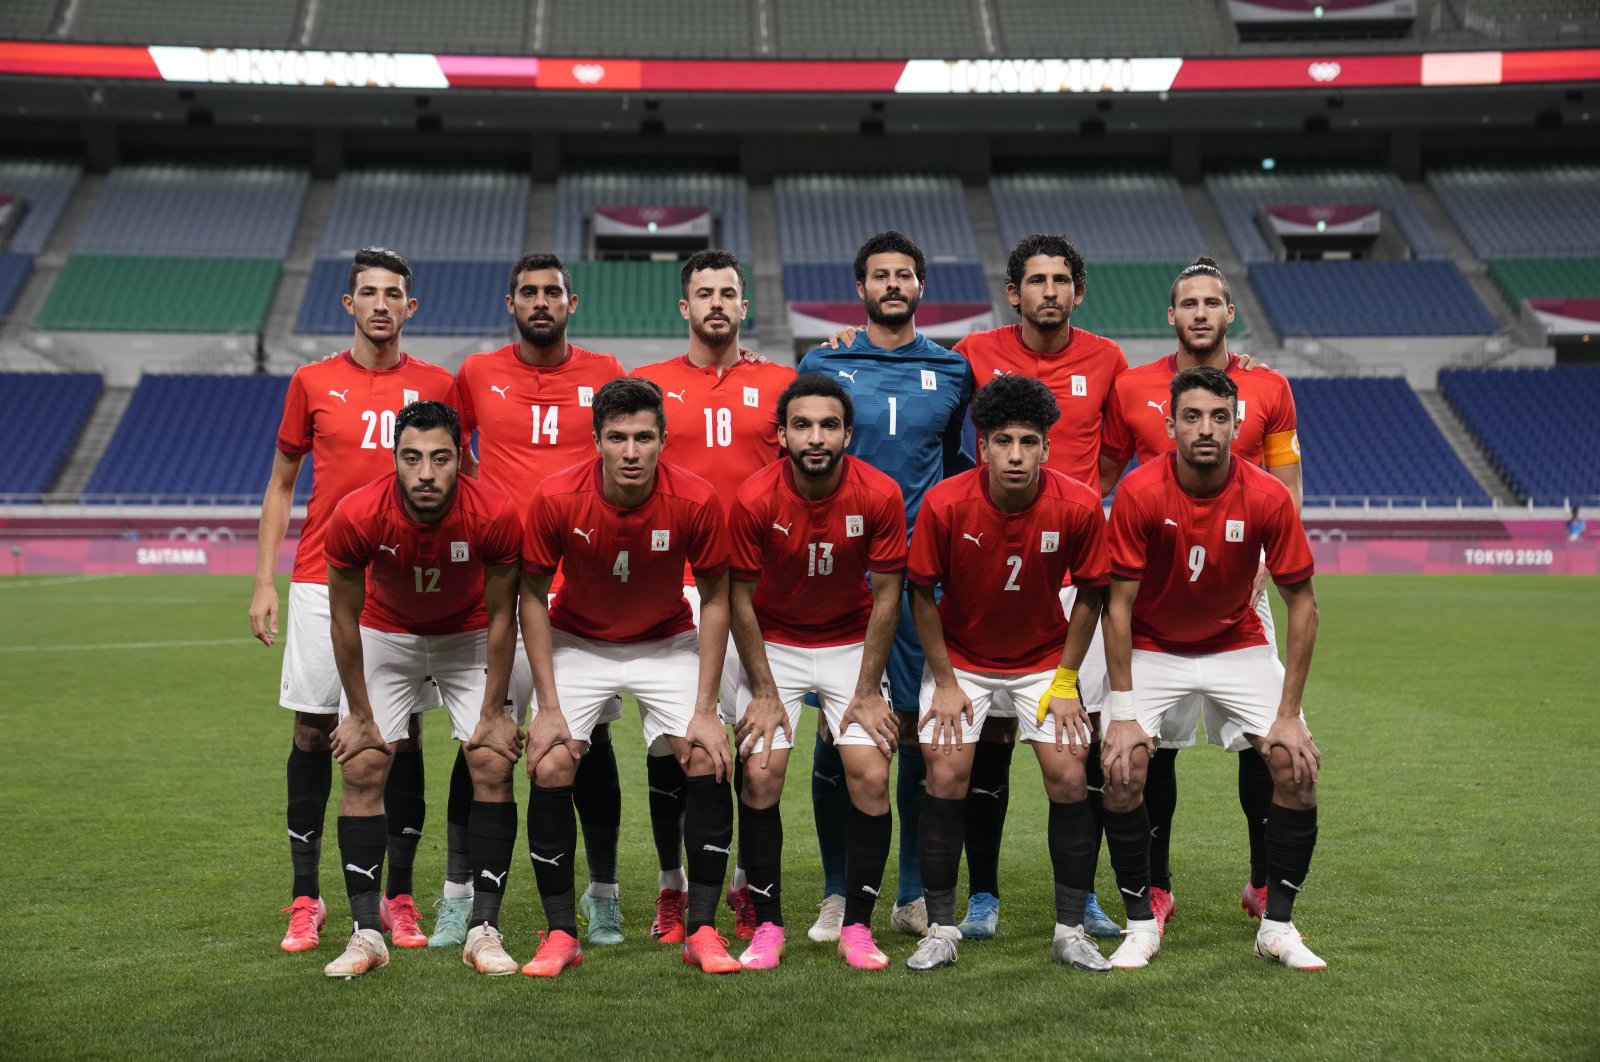 Egypt players pose for a team photo prior to the Tokyo 2020 men's quarterfinal against Brazil, Saitama, Japan, July 31, 2021. (AP Photo)